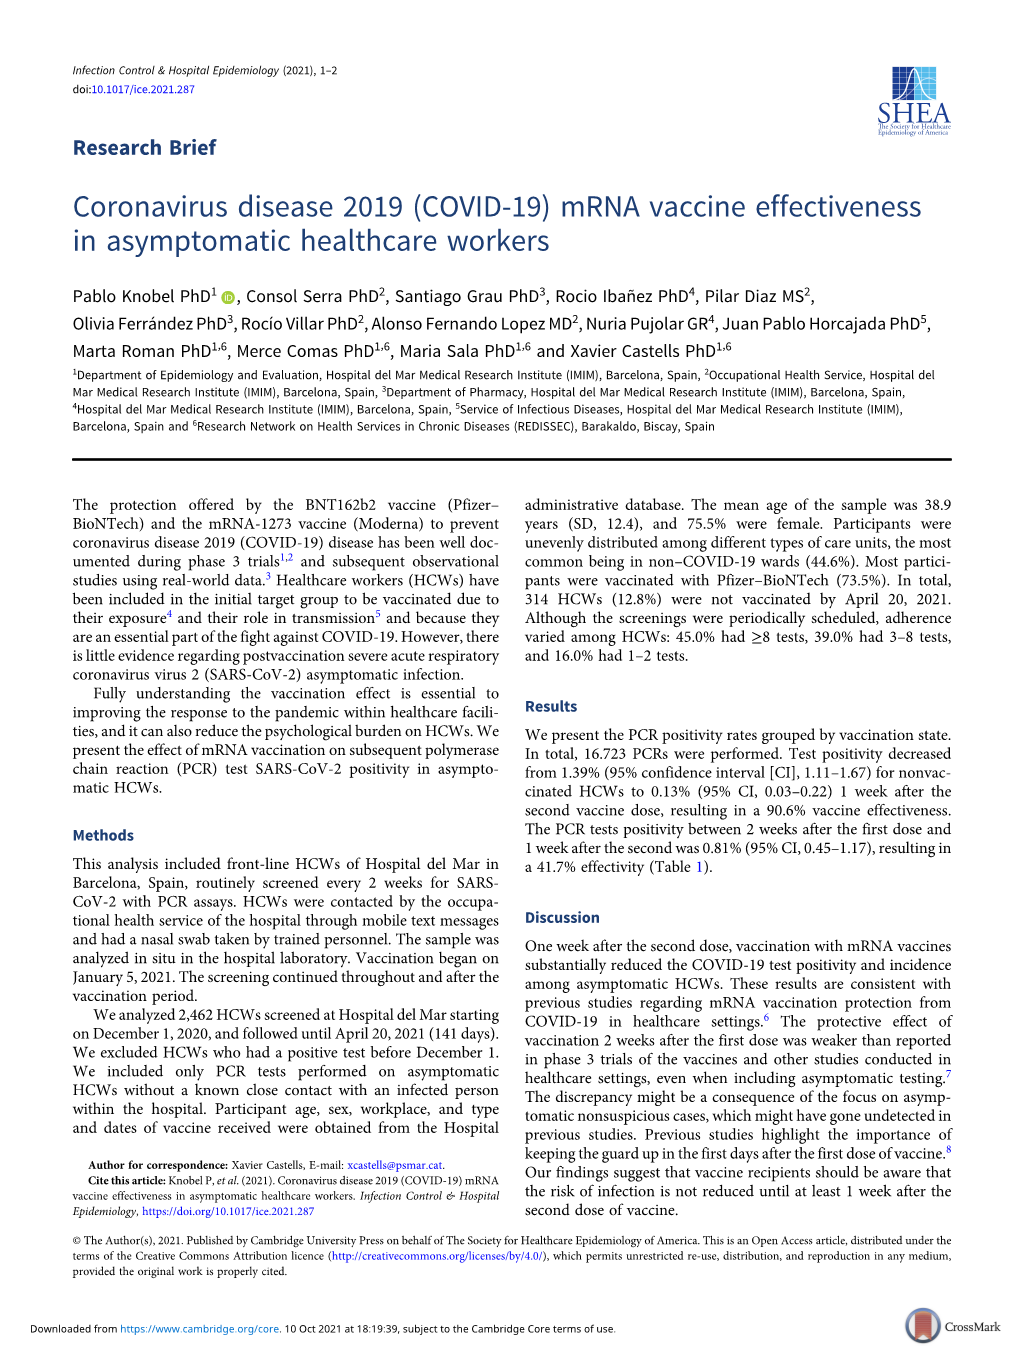 Mrna Vaccine Effectiveness in Asymptomatic Healthcare Workers